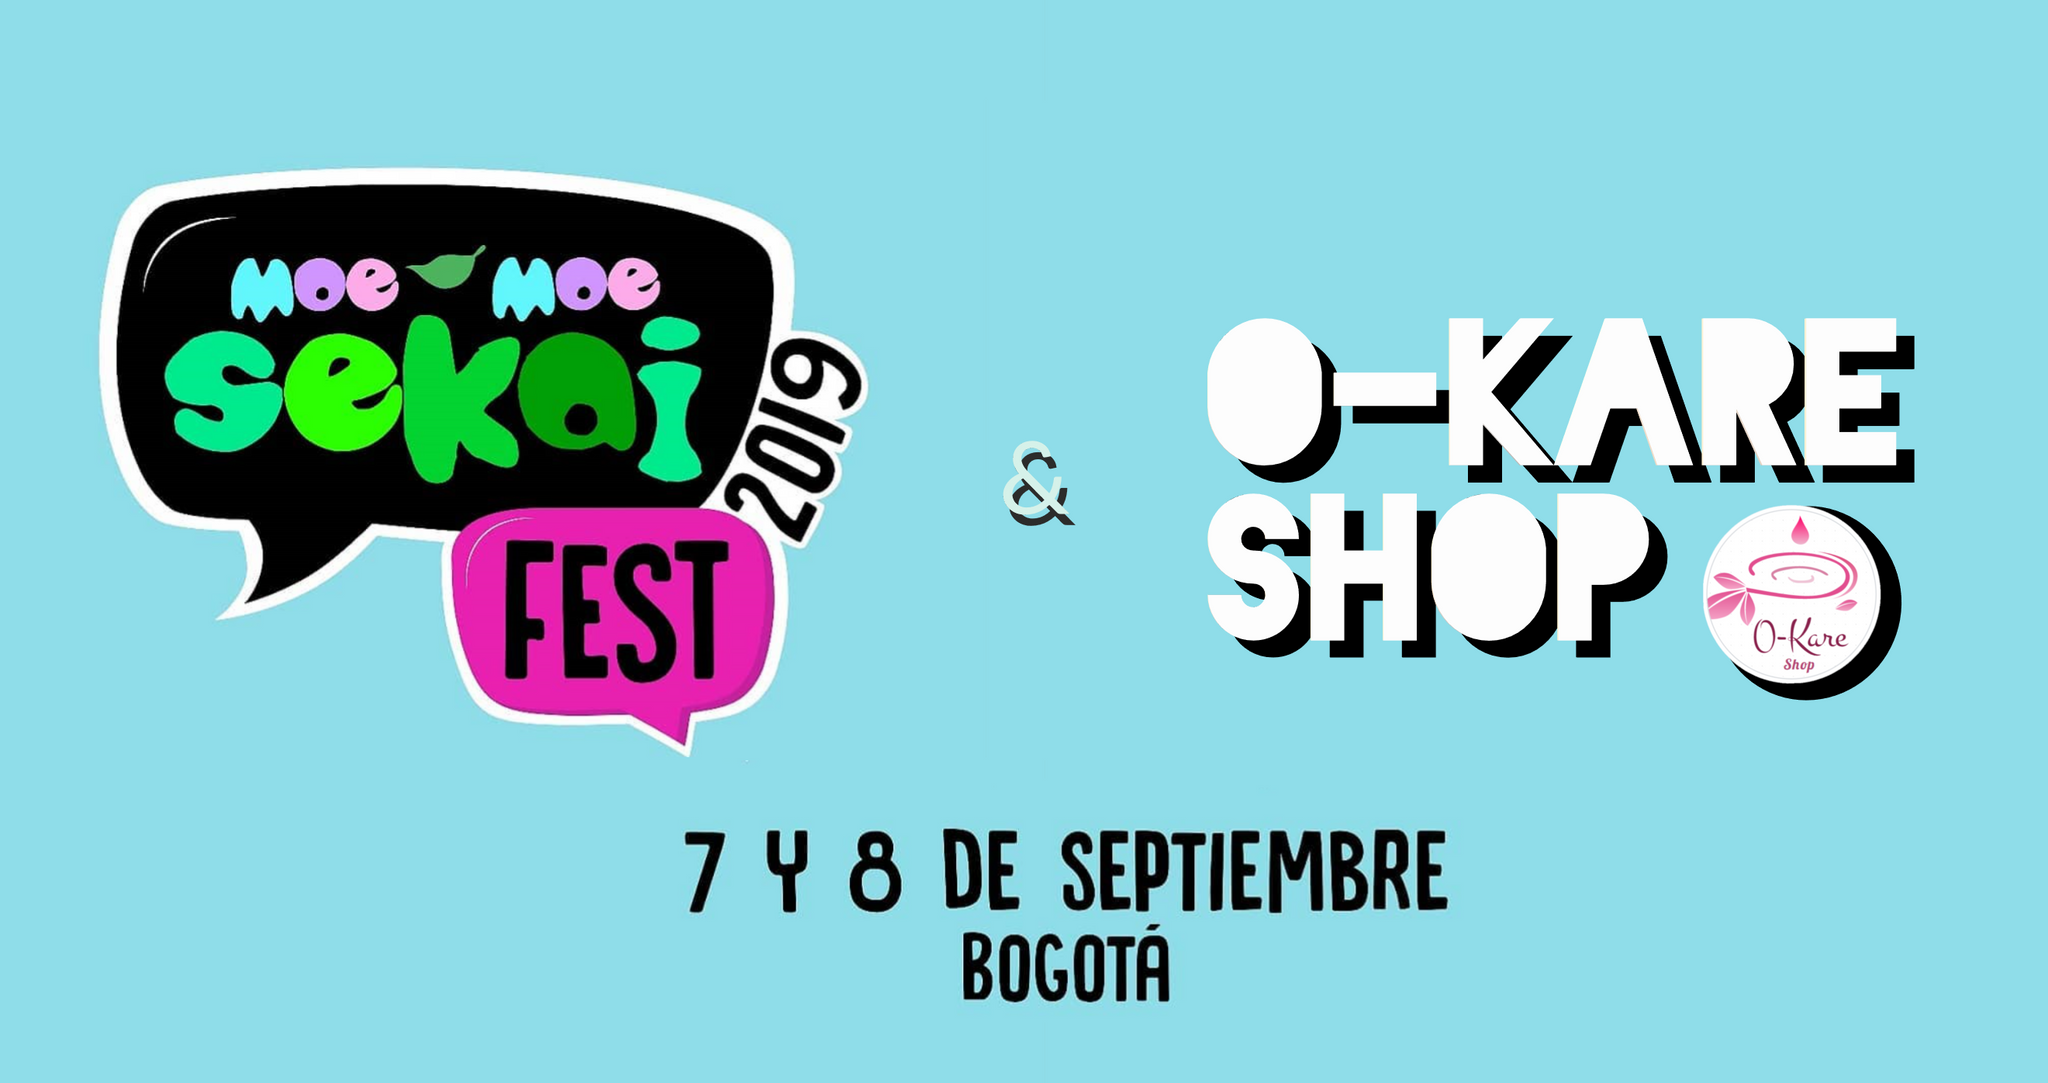 O-Kare Shop @Moemoe Sekai FEST, 7 - 8 Septiembre 2019!